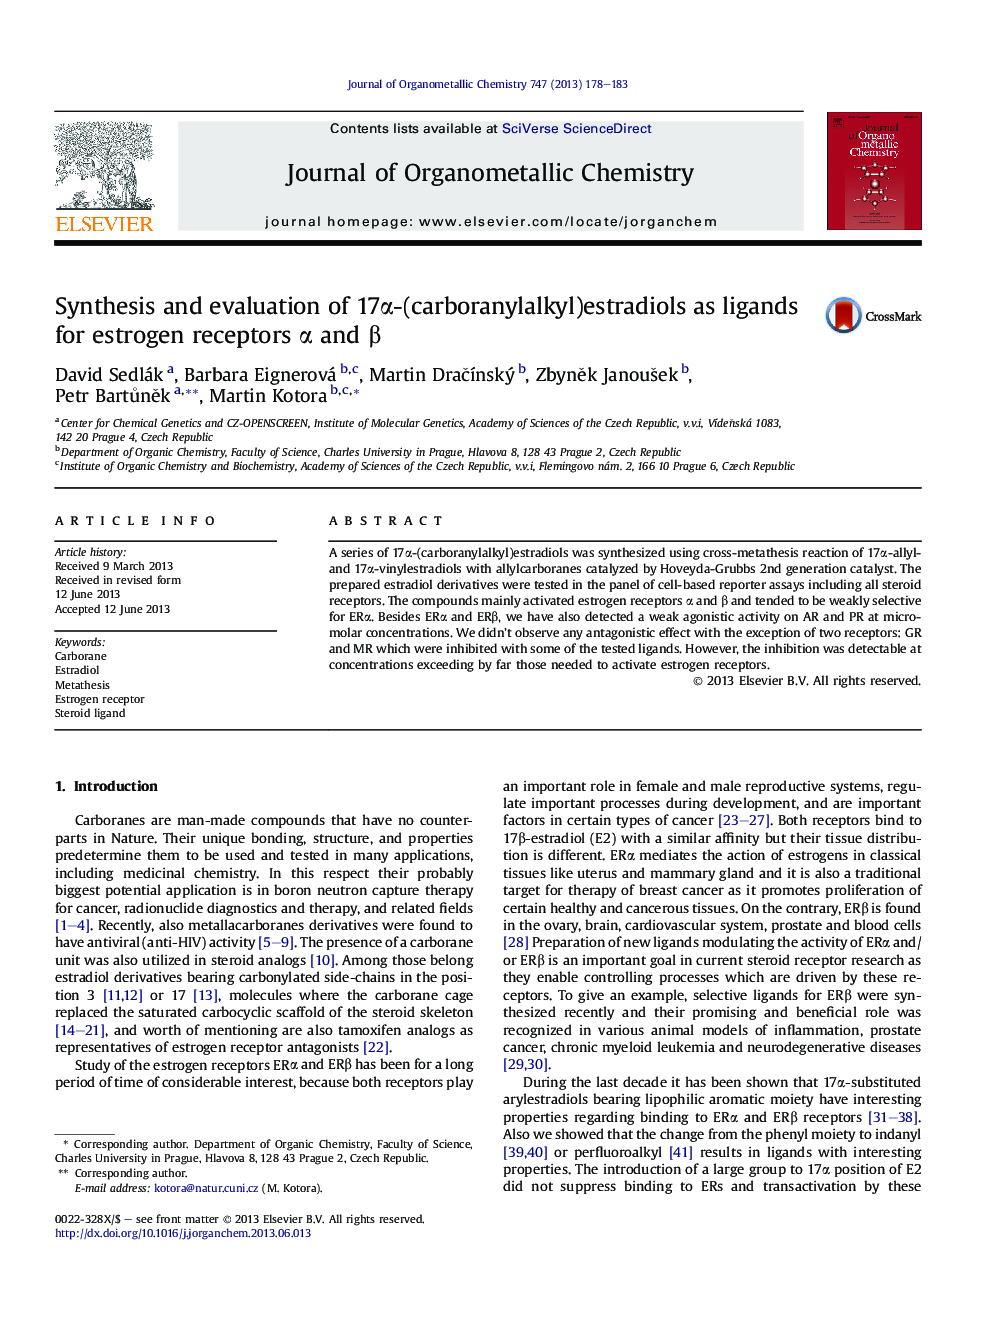 Synthesis and evaluation of 17α-(carboranylalkyl)estradiols as ligands for estrogen receptors α and β